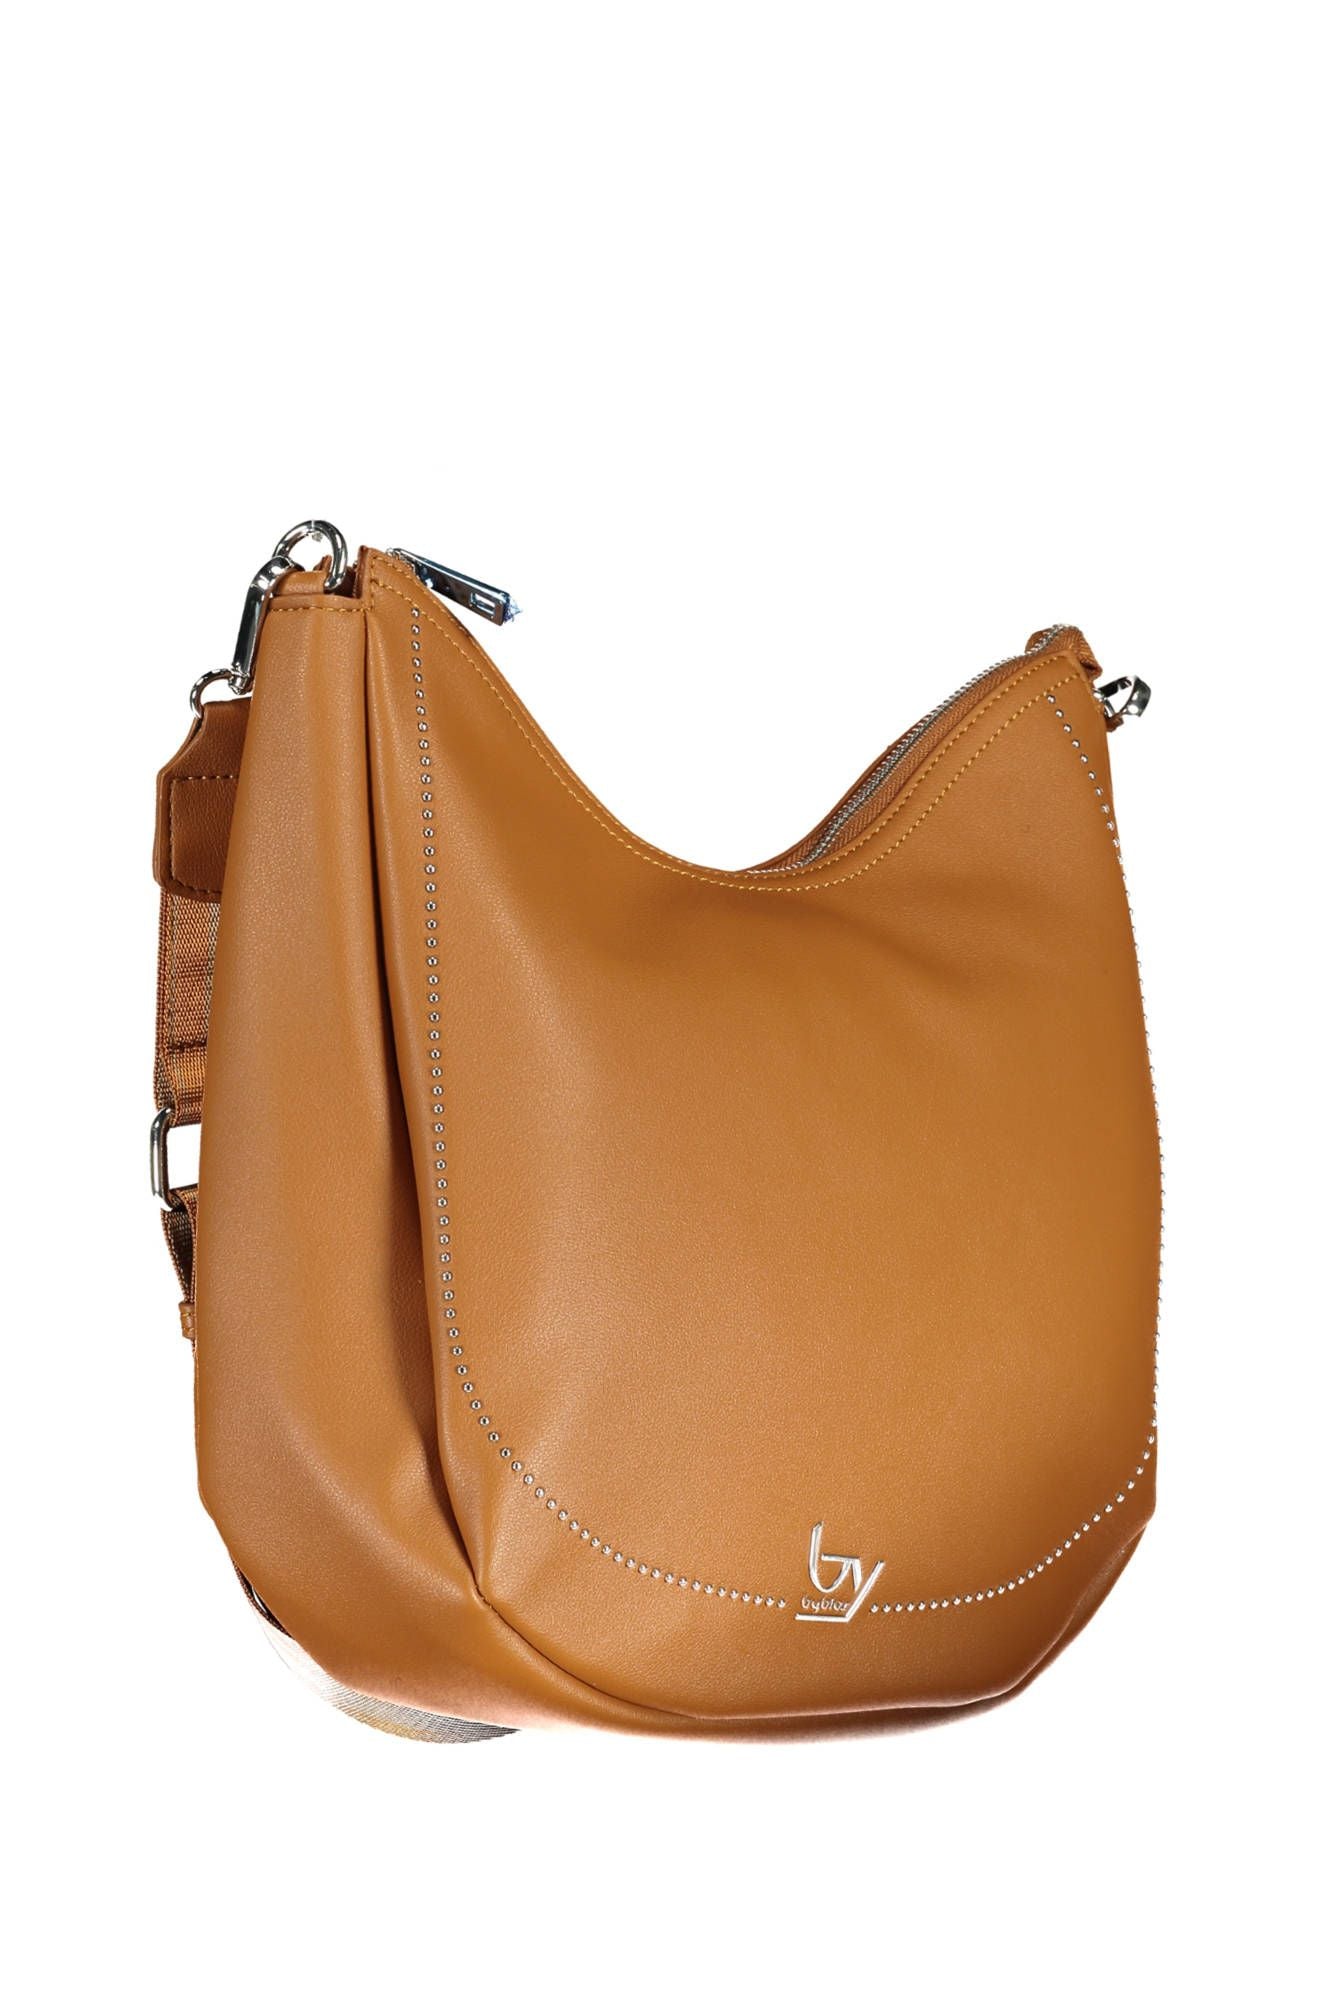 Byblos Chic Brown Handbag with Contrasting Details